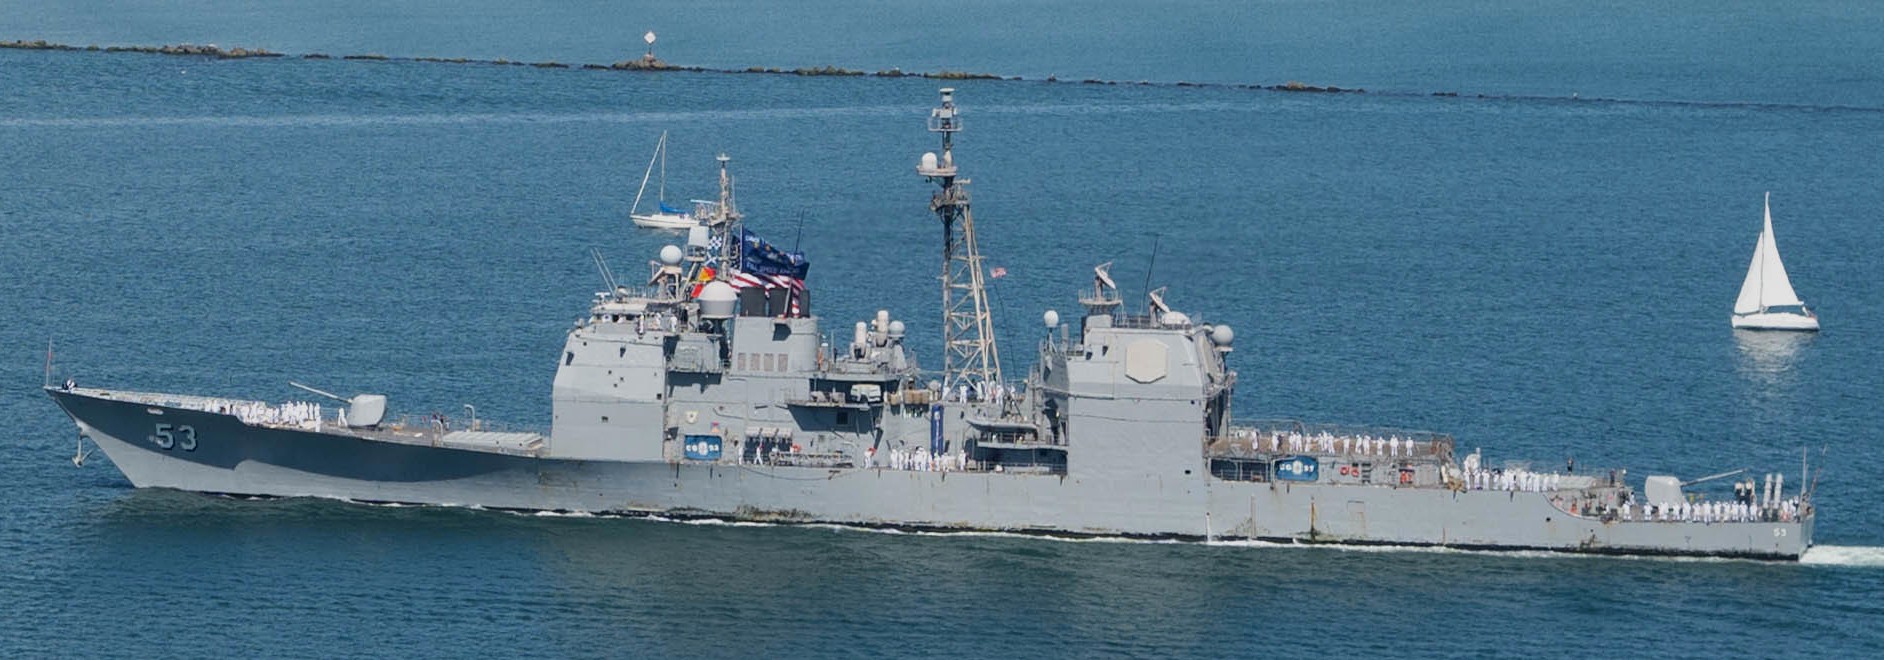 cg-53 uss mobile bay ticonderoga class guided missile cruiser aegis us navy naval base san diego california 159